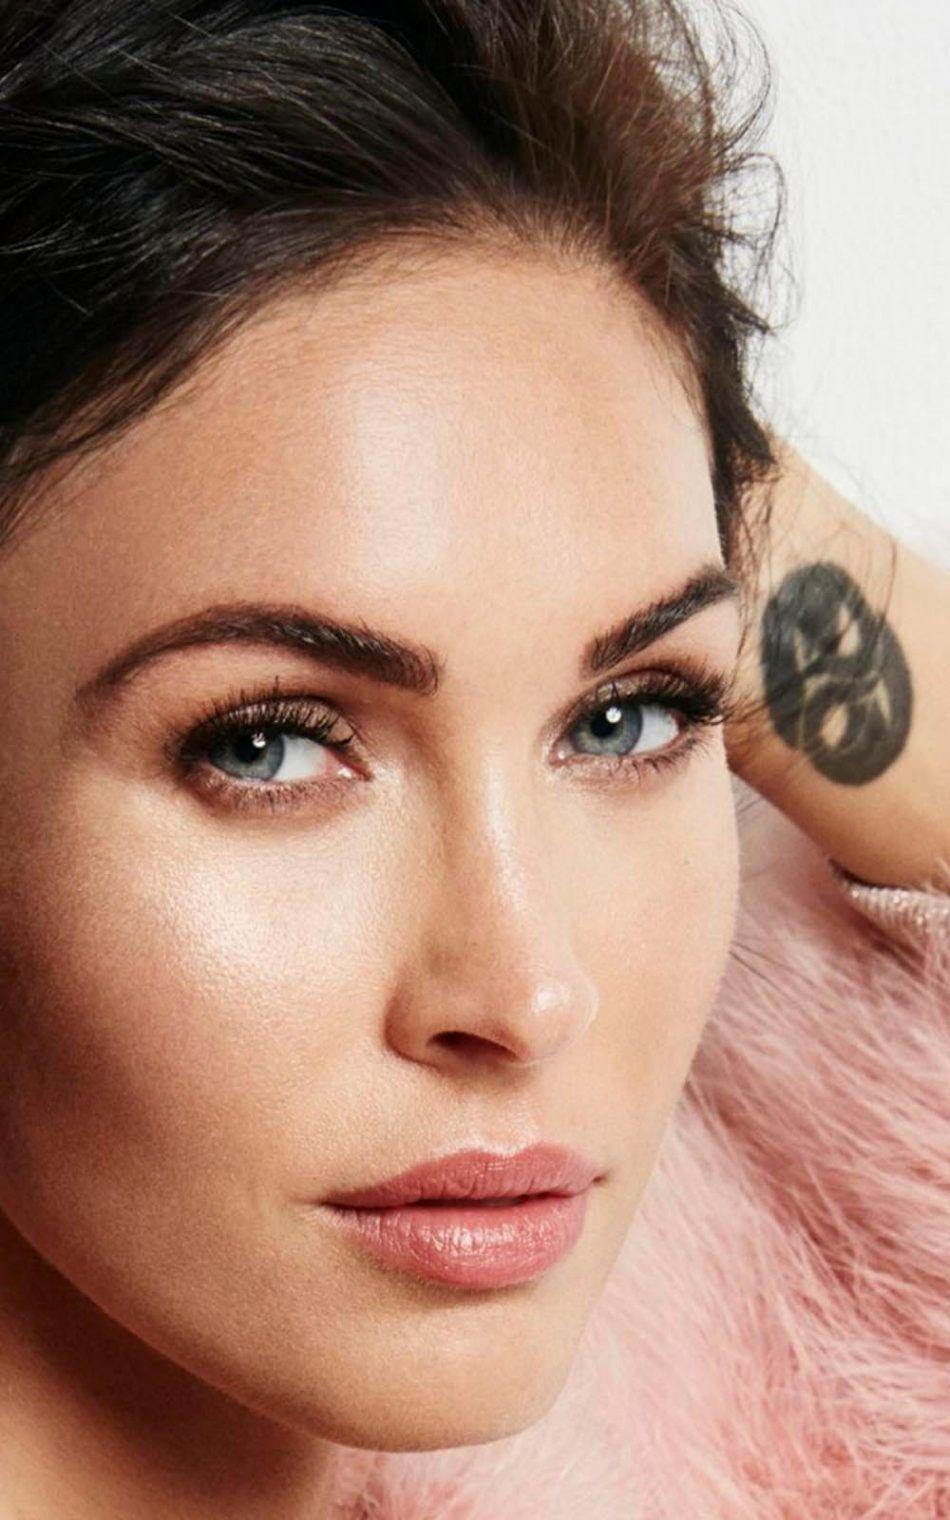 Megan Fox Cosmopolitan 2017 Photohoot Free 100% Pure HD